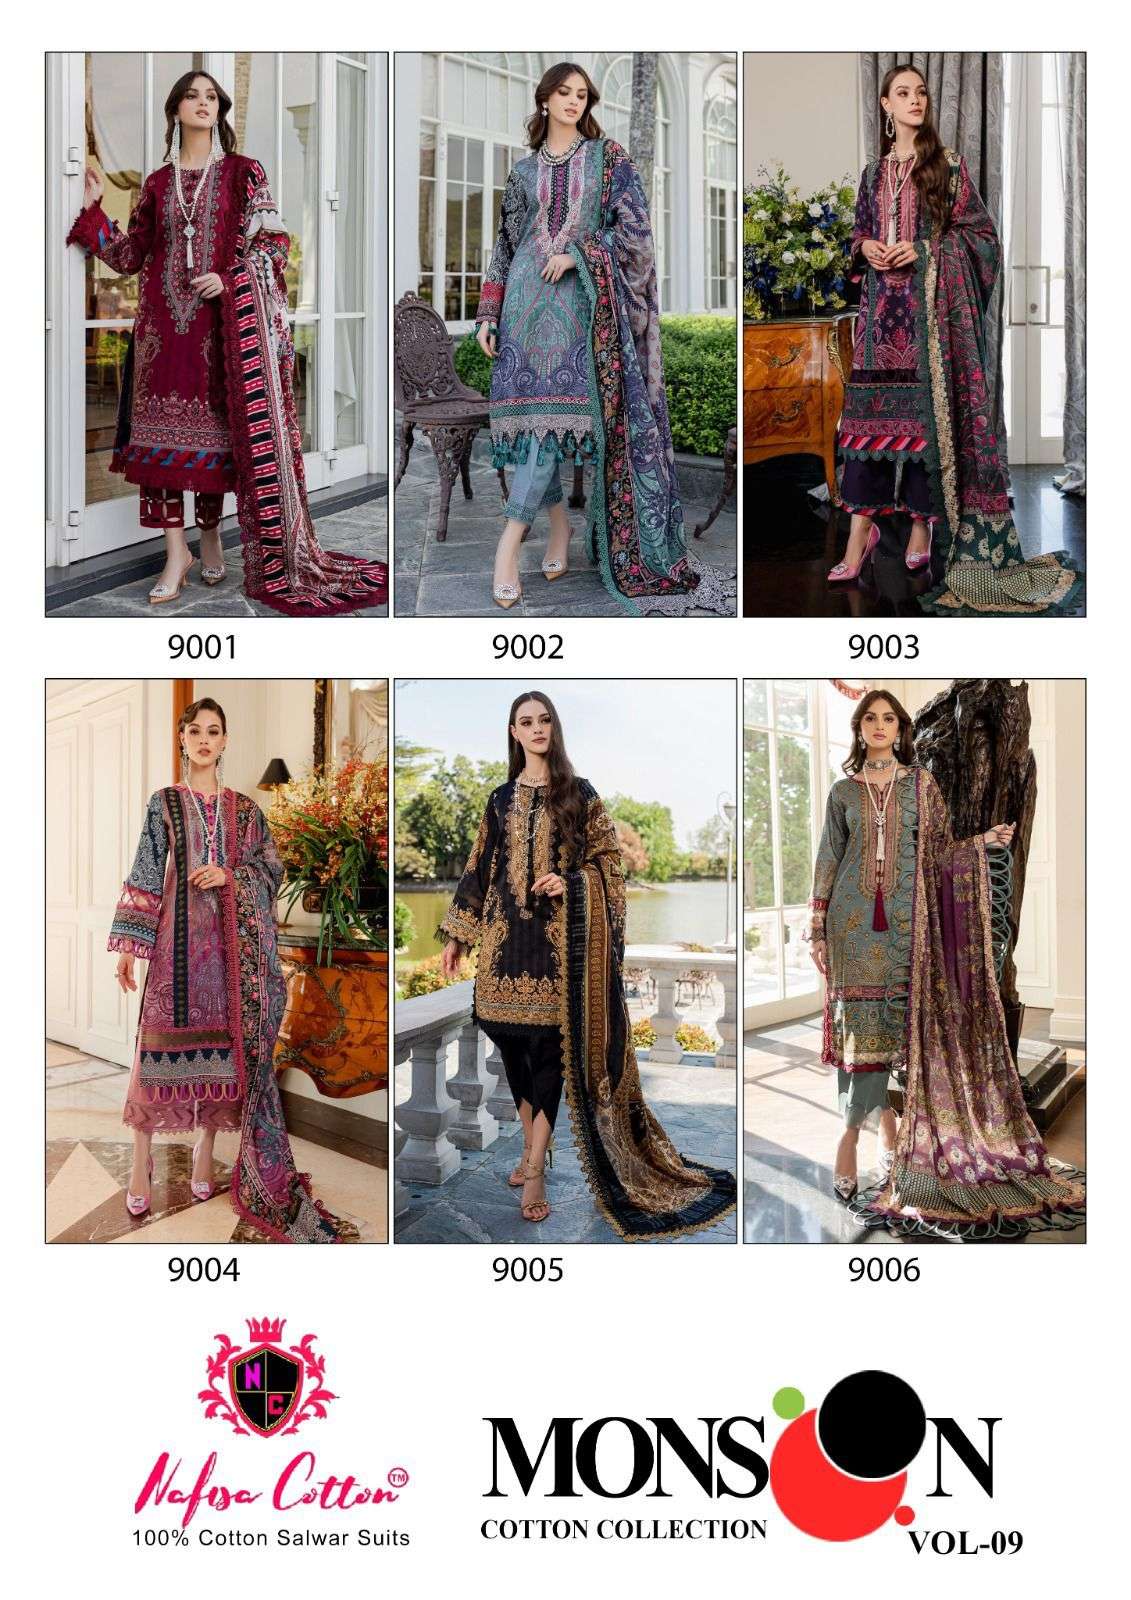 nafisa cotton monsoon vol-9 9001-9006 series pure cotton designer pakistani salwar suits in surat 